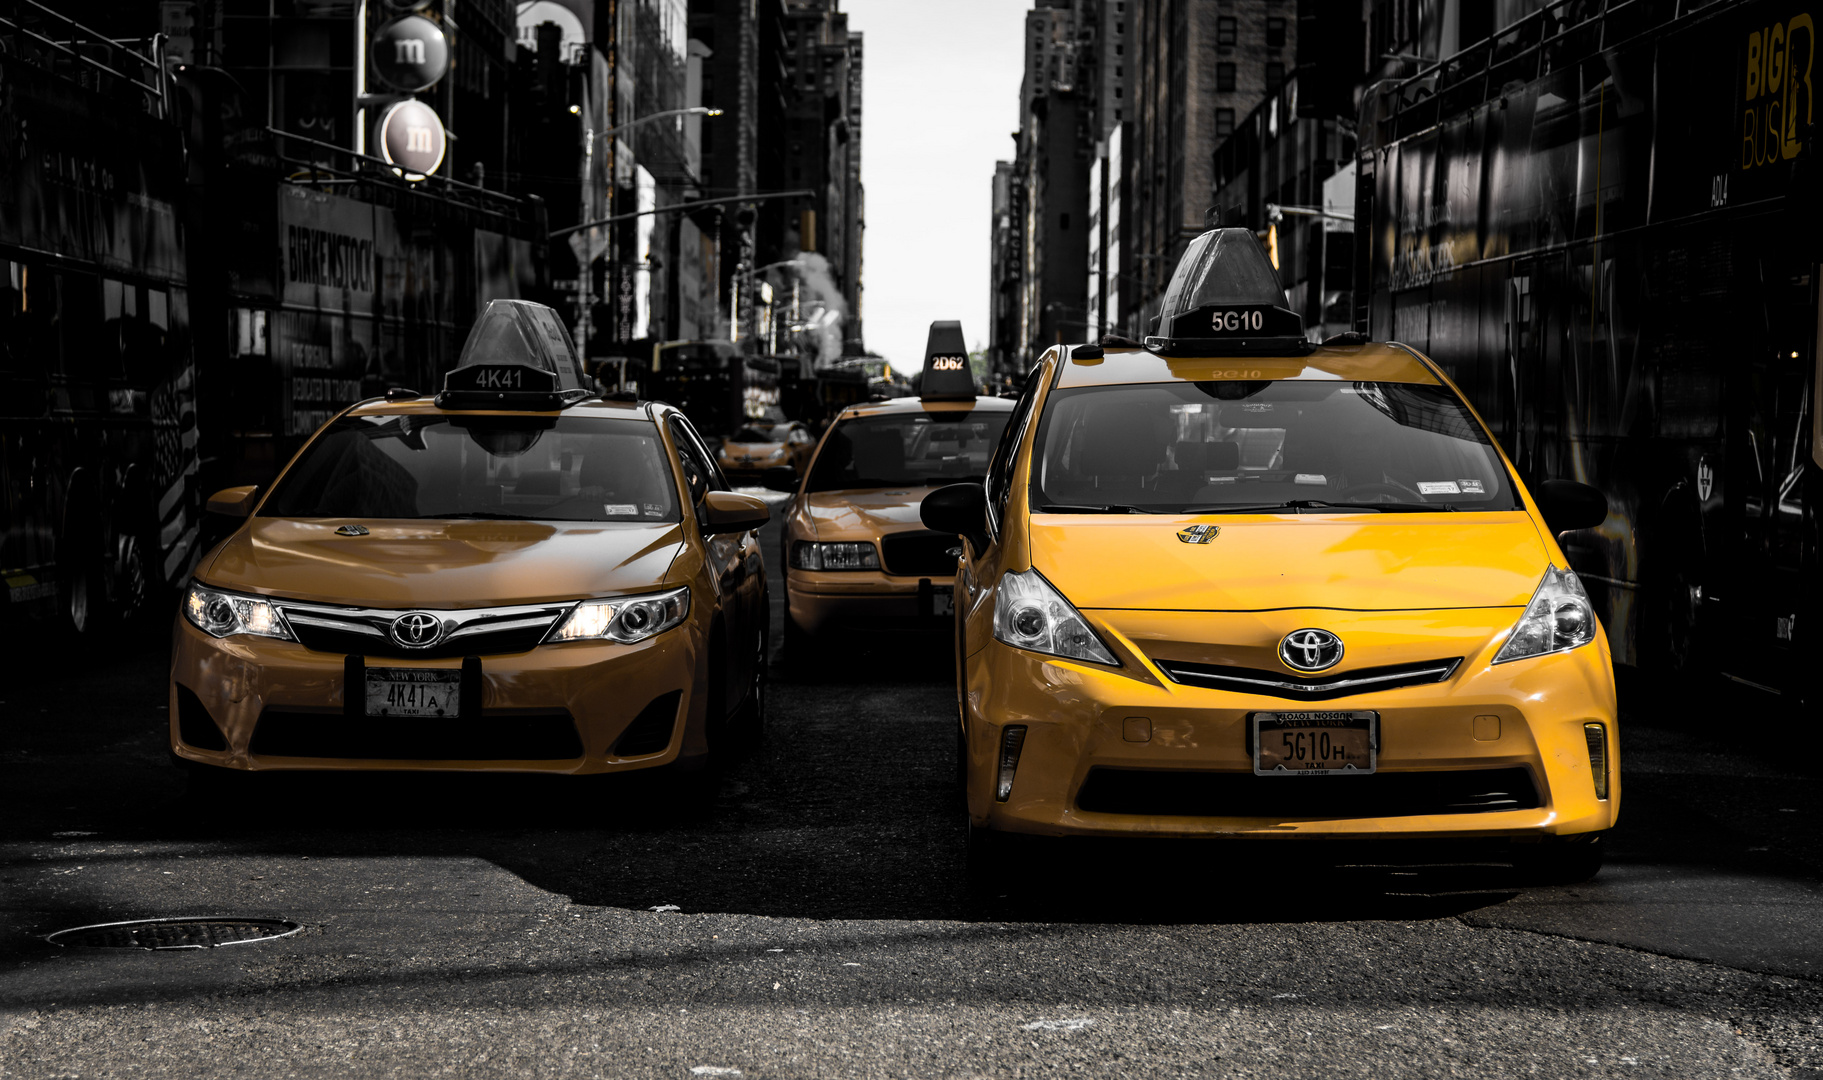 New York 2014 - Yellow Cab